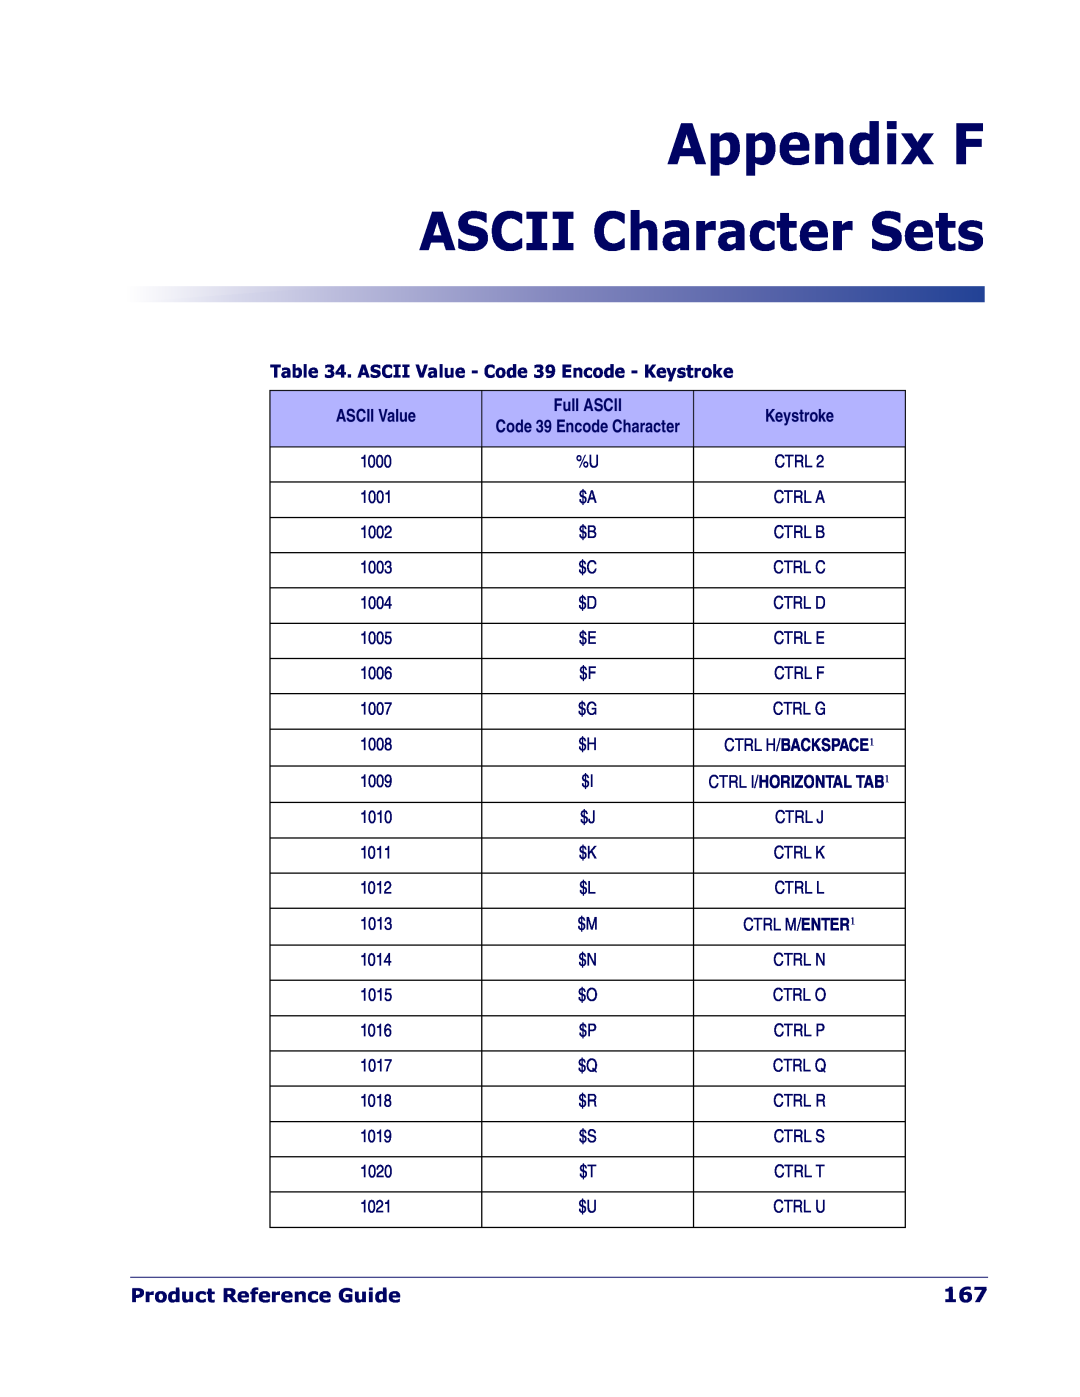 Datalogic Scanning QD 2300 Appendix F, ASCII Character Sets, Product Reference Guide, ASCII Value, Full ASCII, Keystroke 